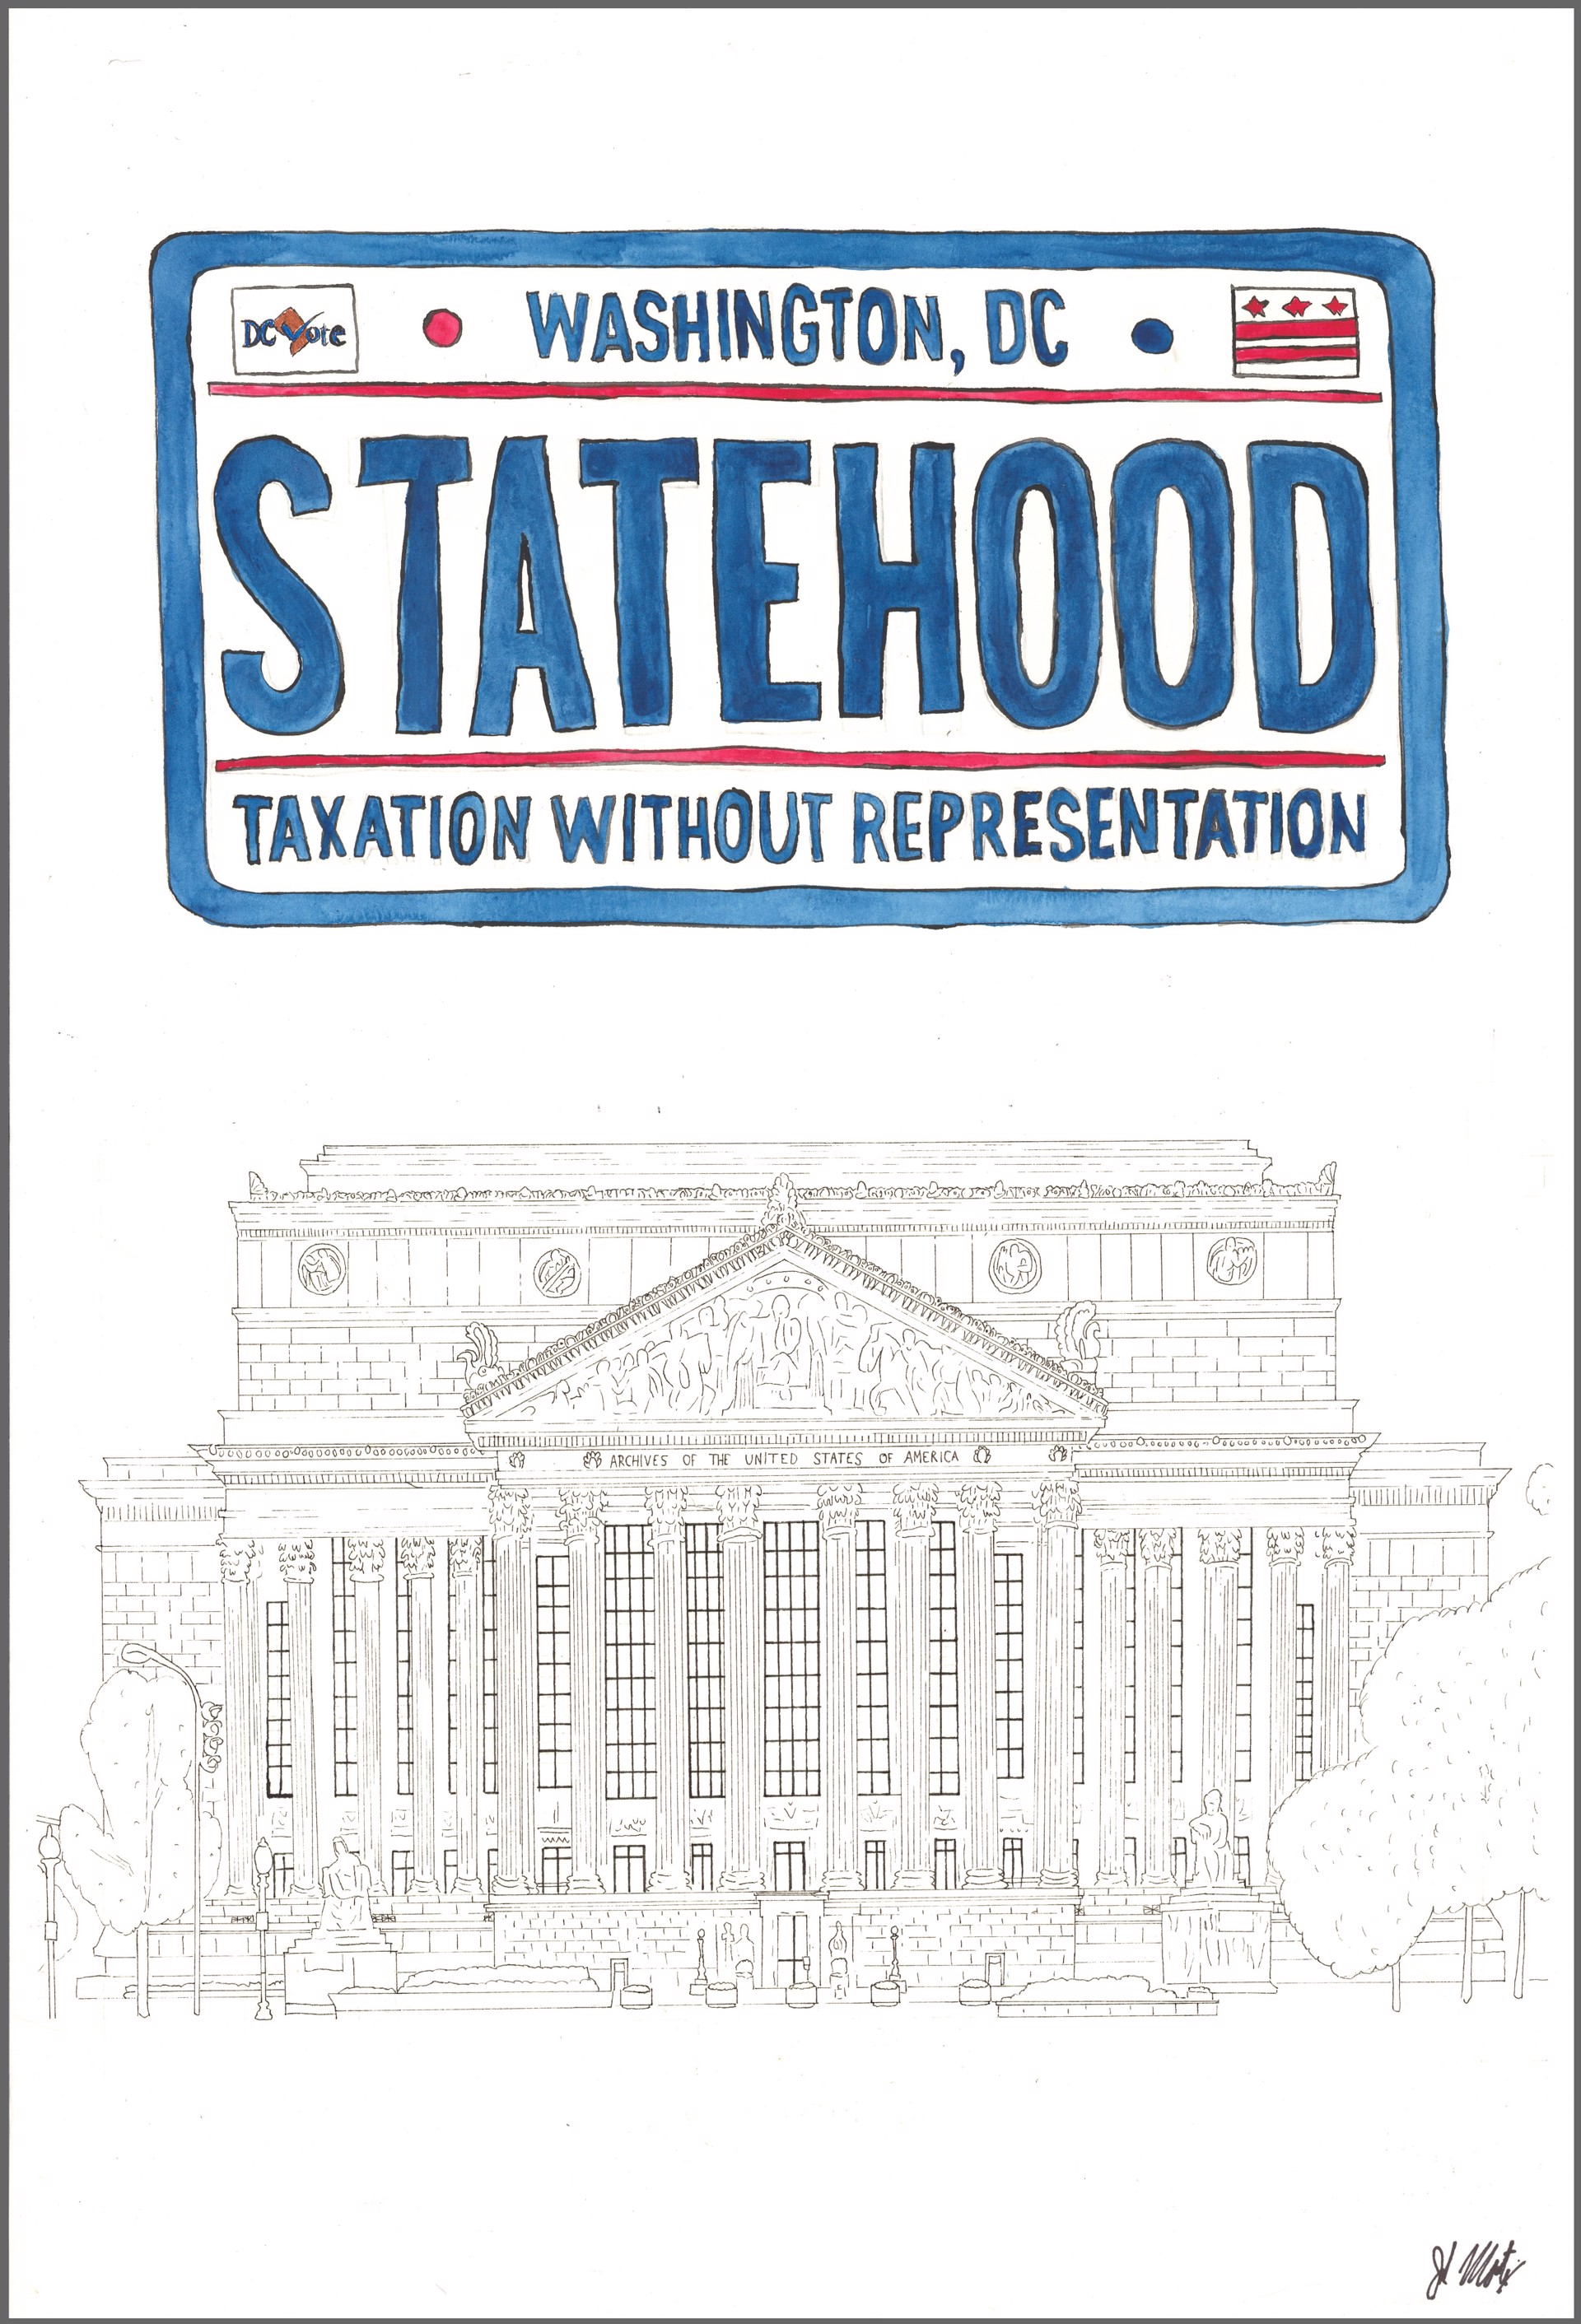 Statehood (National Archives) by Joel Martinez